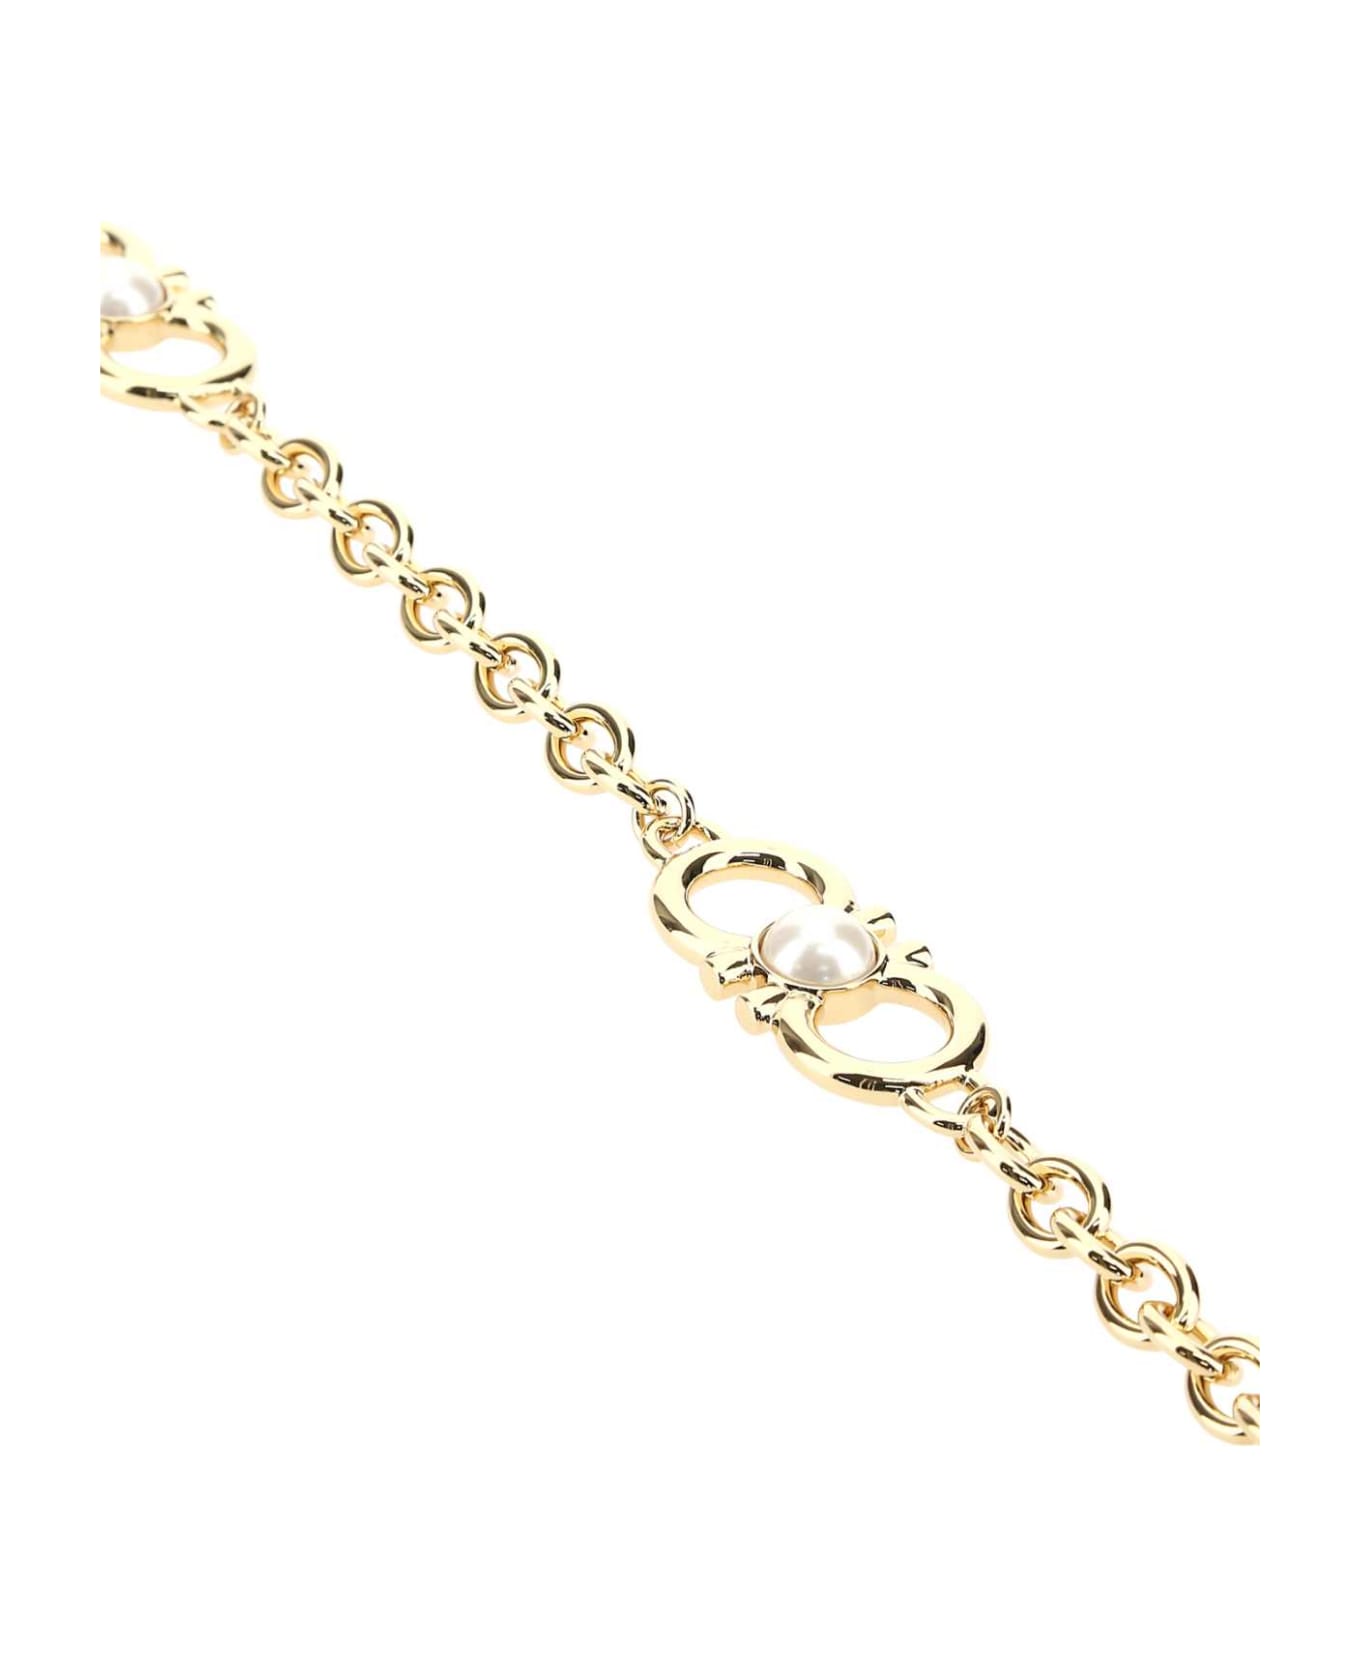 Ferragamo Golden Metal Necklace - OROPERBIA